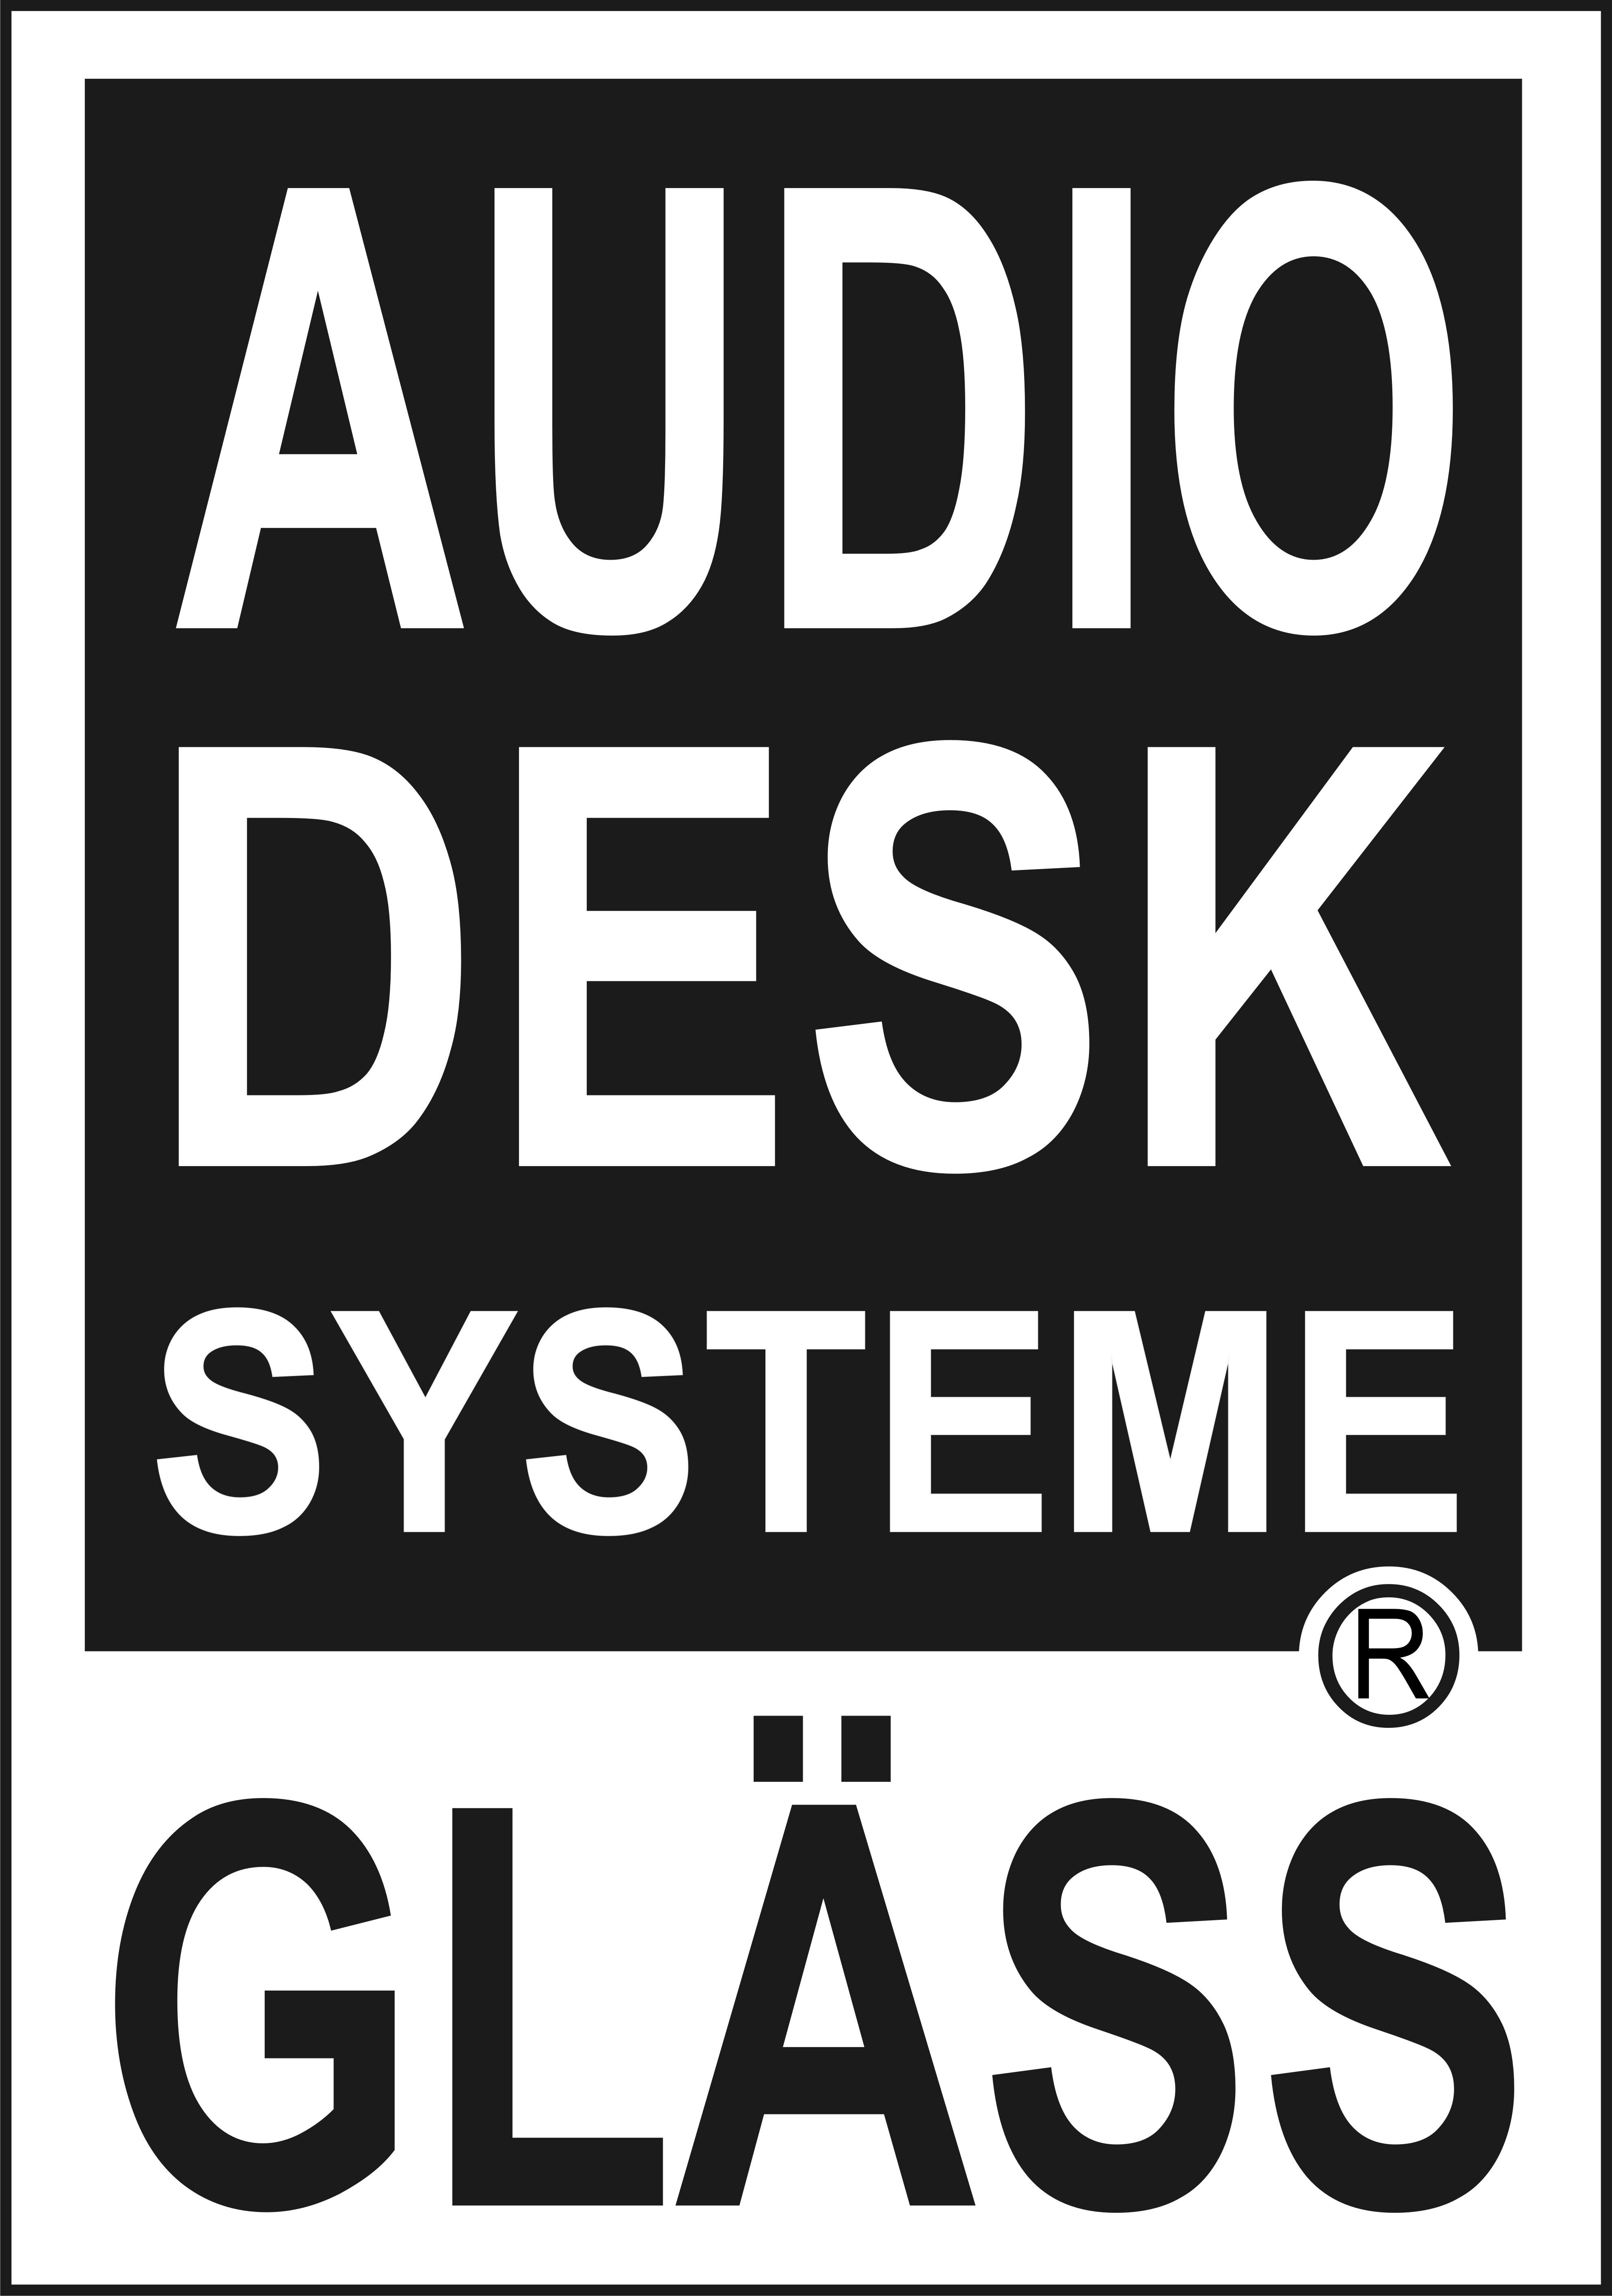 Audio Desk Systeme Gläss